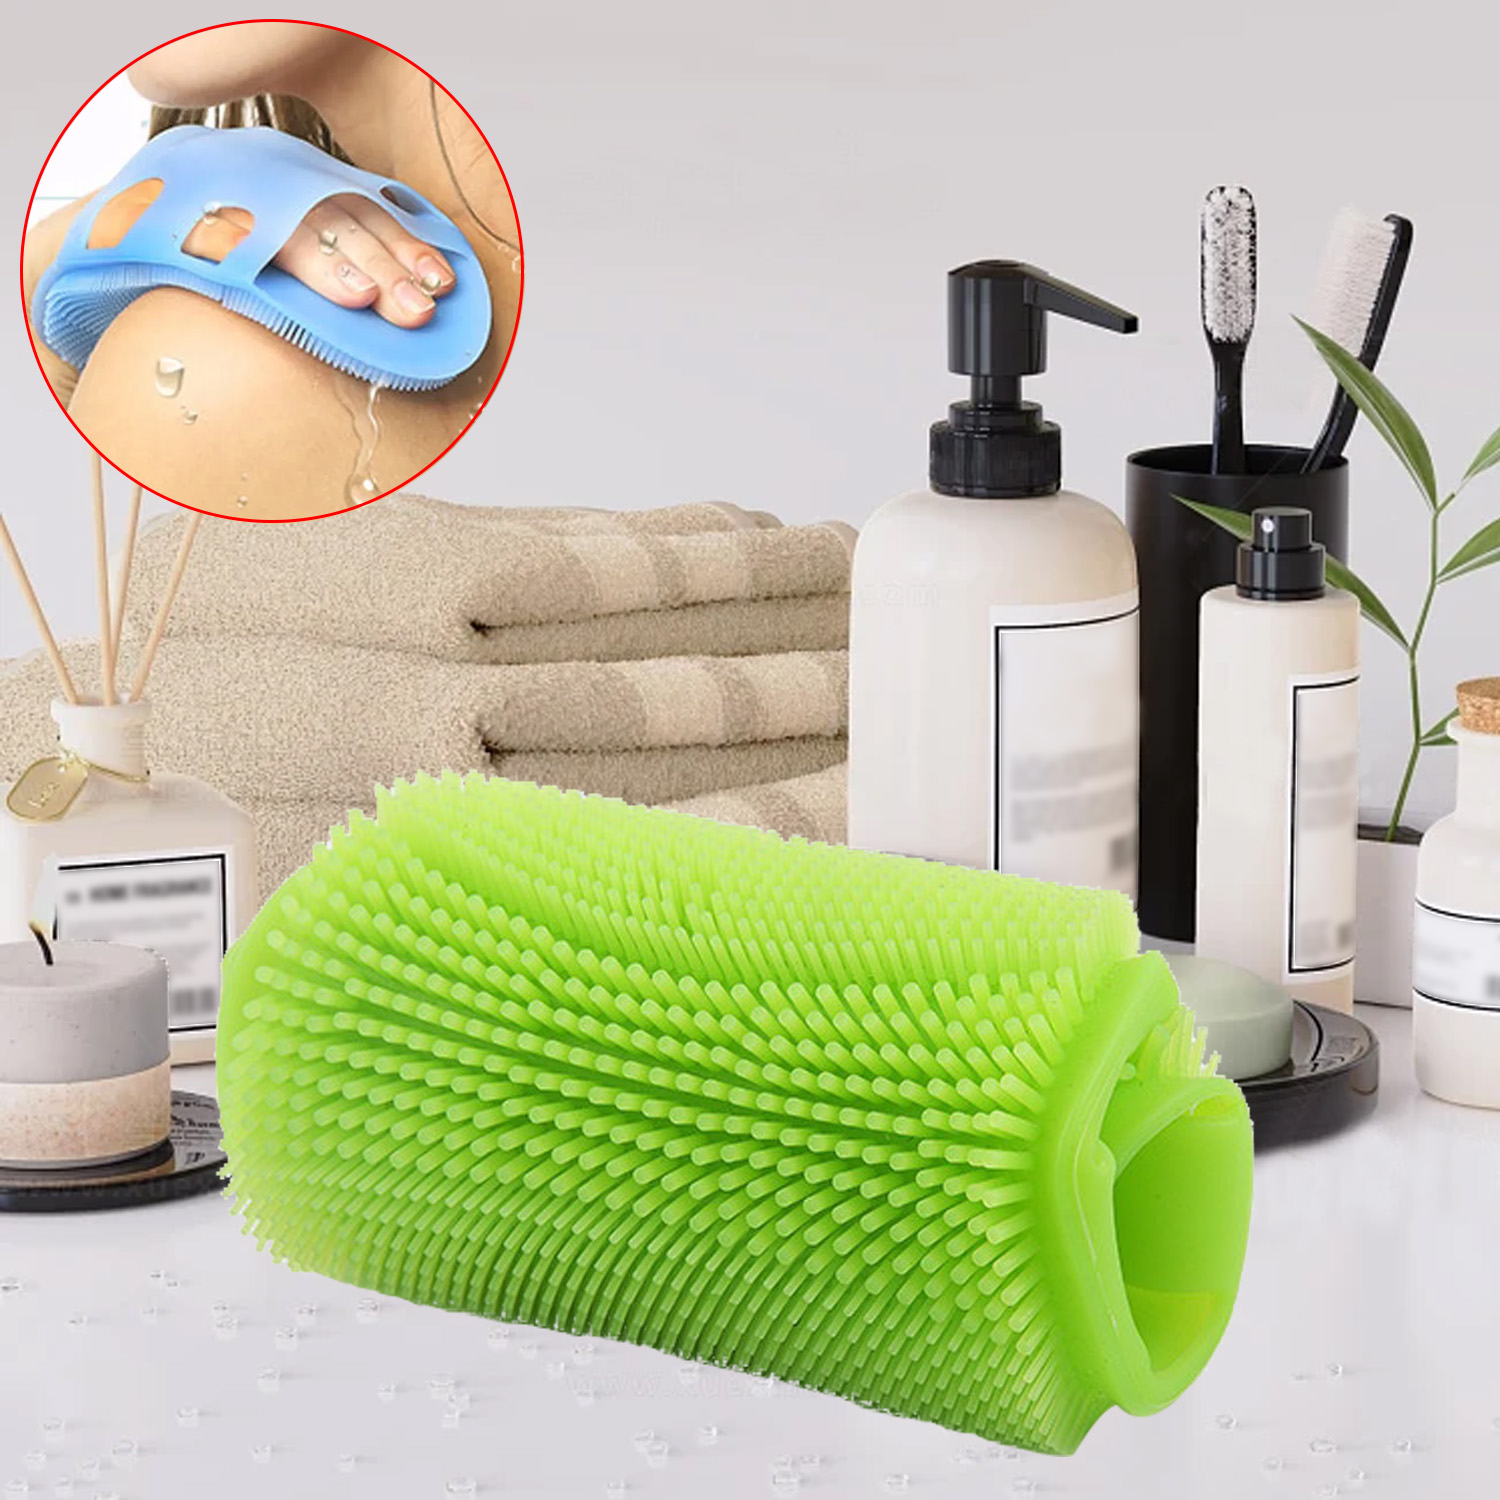 Facial Cleansing Brush Instrument Multifunctional Silicone Wash Face Brush Wash Head Bath Brush